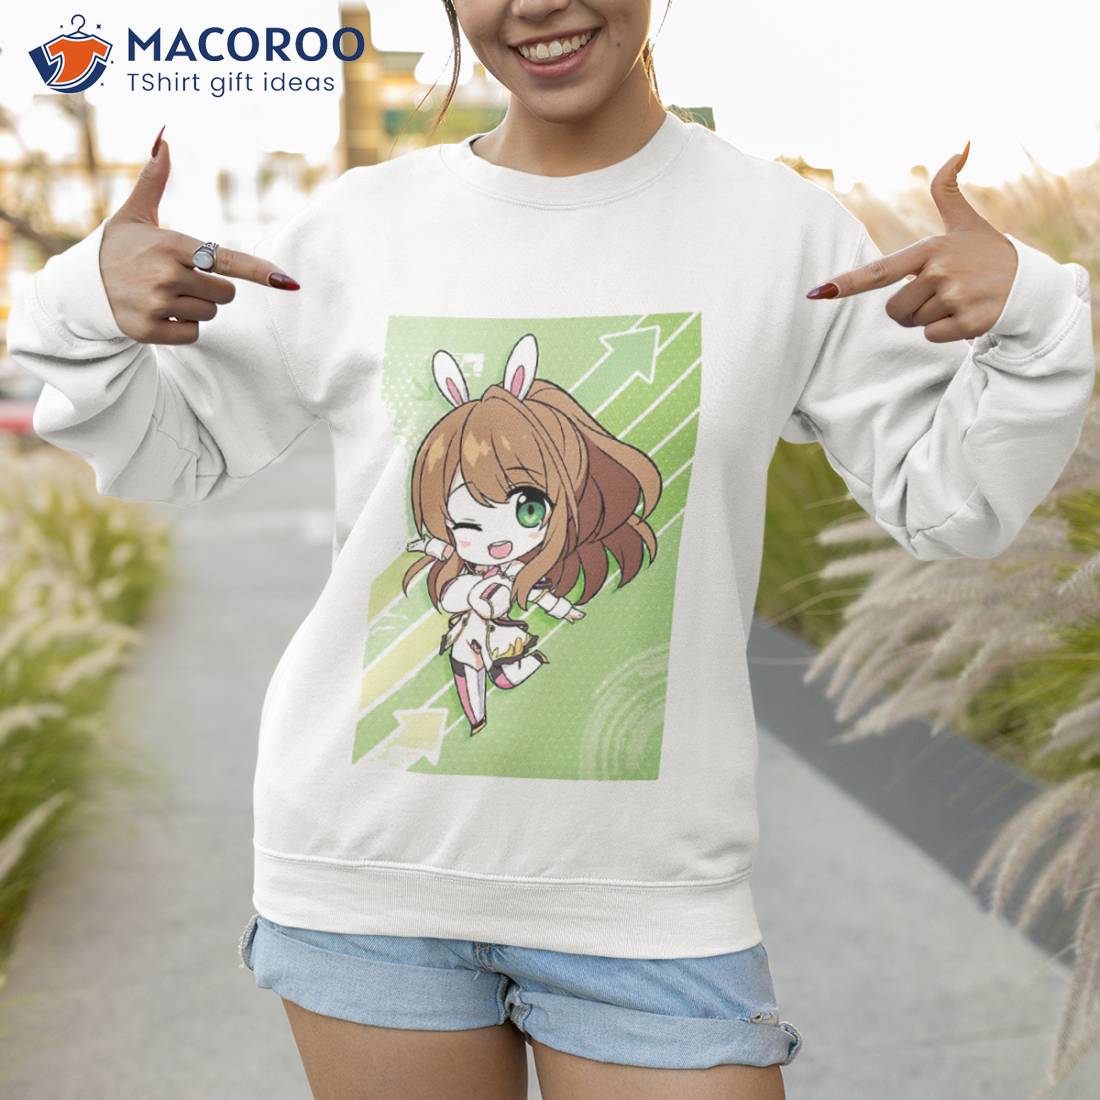 Kawaii Anime Characters T-Shirts for Sale